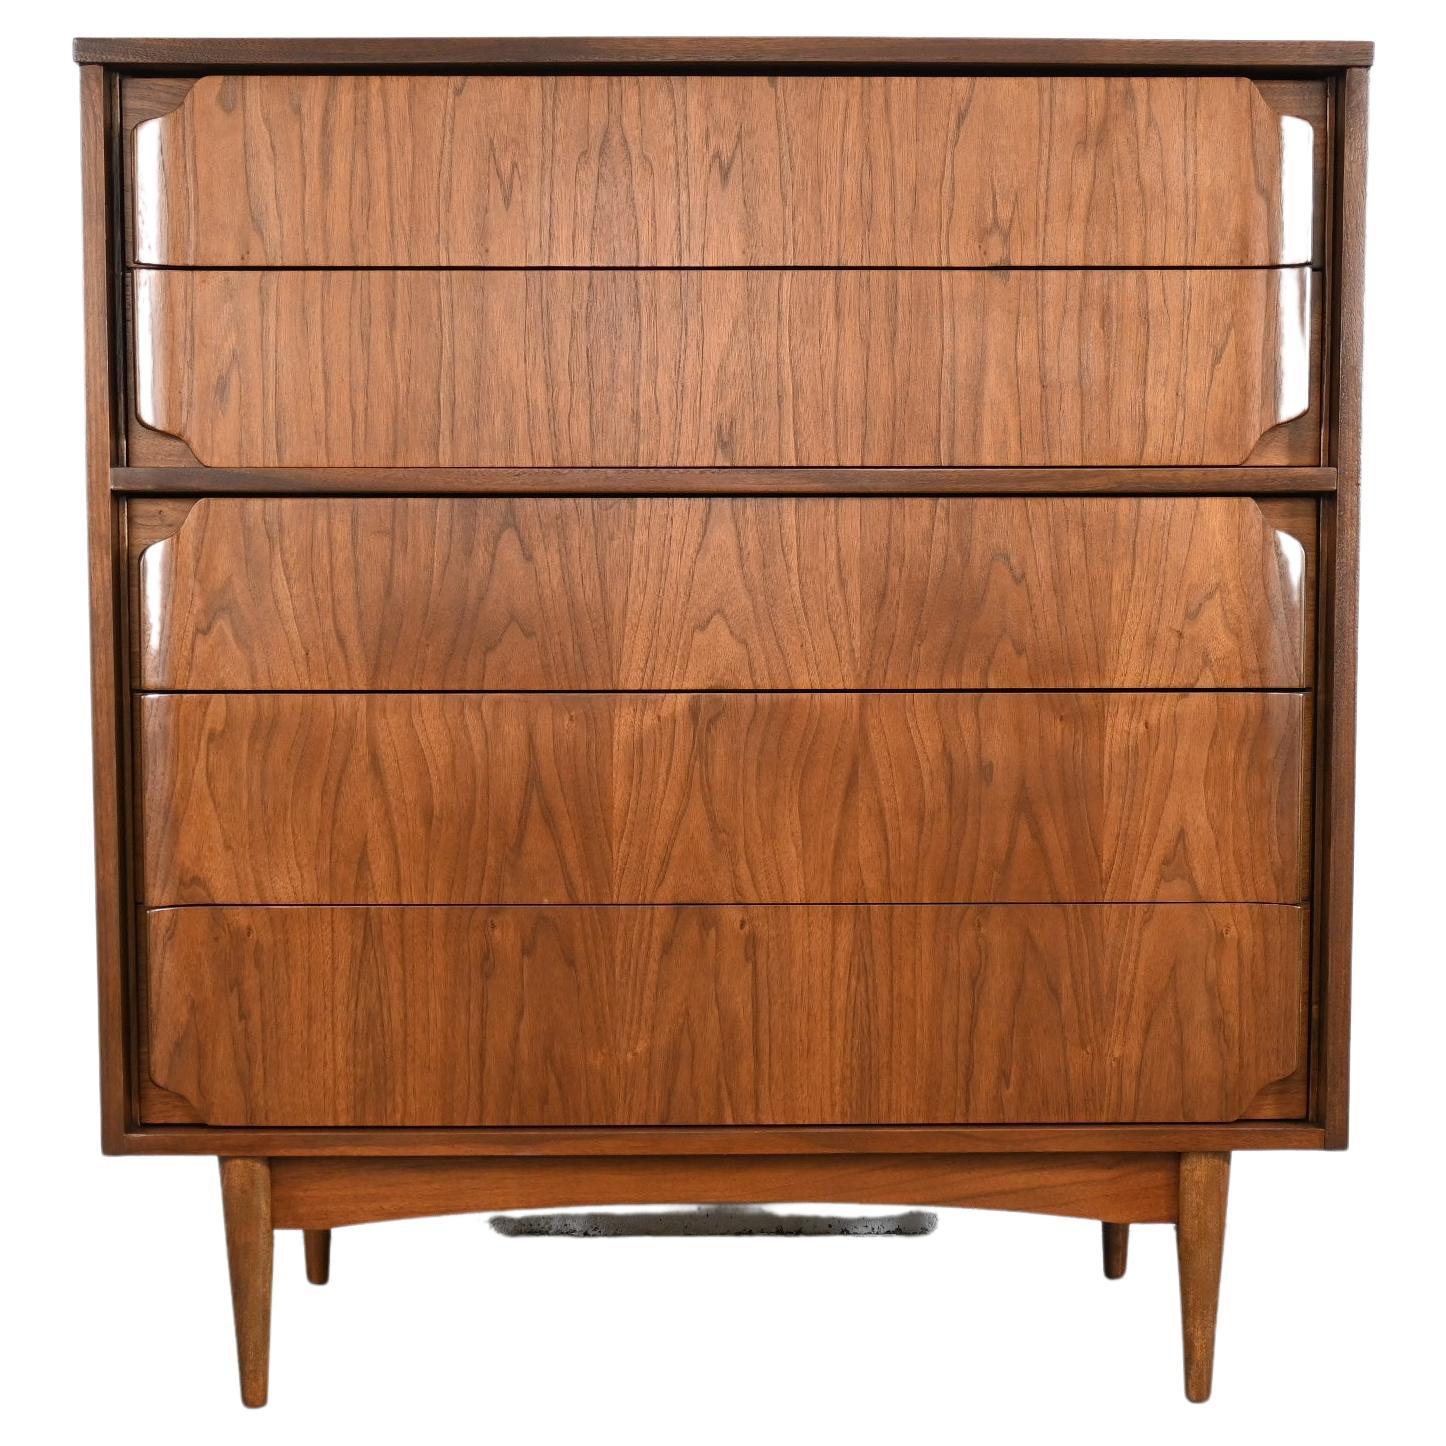 Broyhill Furniture Mid-Century Modern Walnut Highboy Dresser

Broyhill Furniture, 1962, USA

40.13